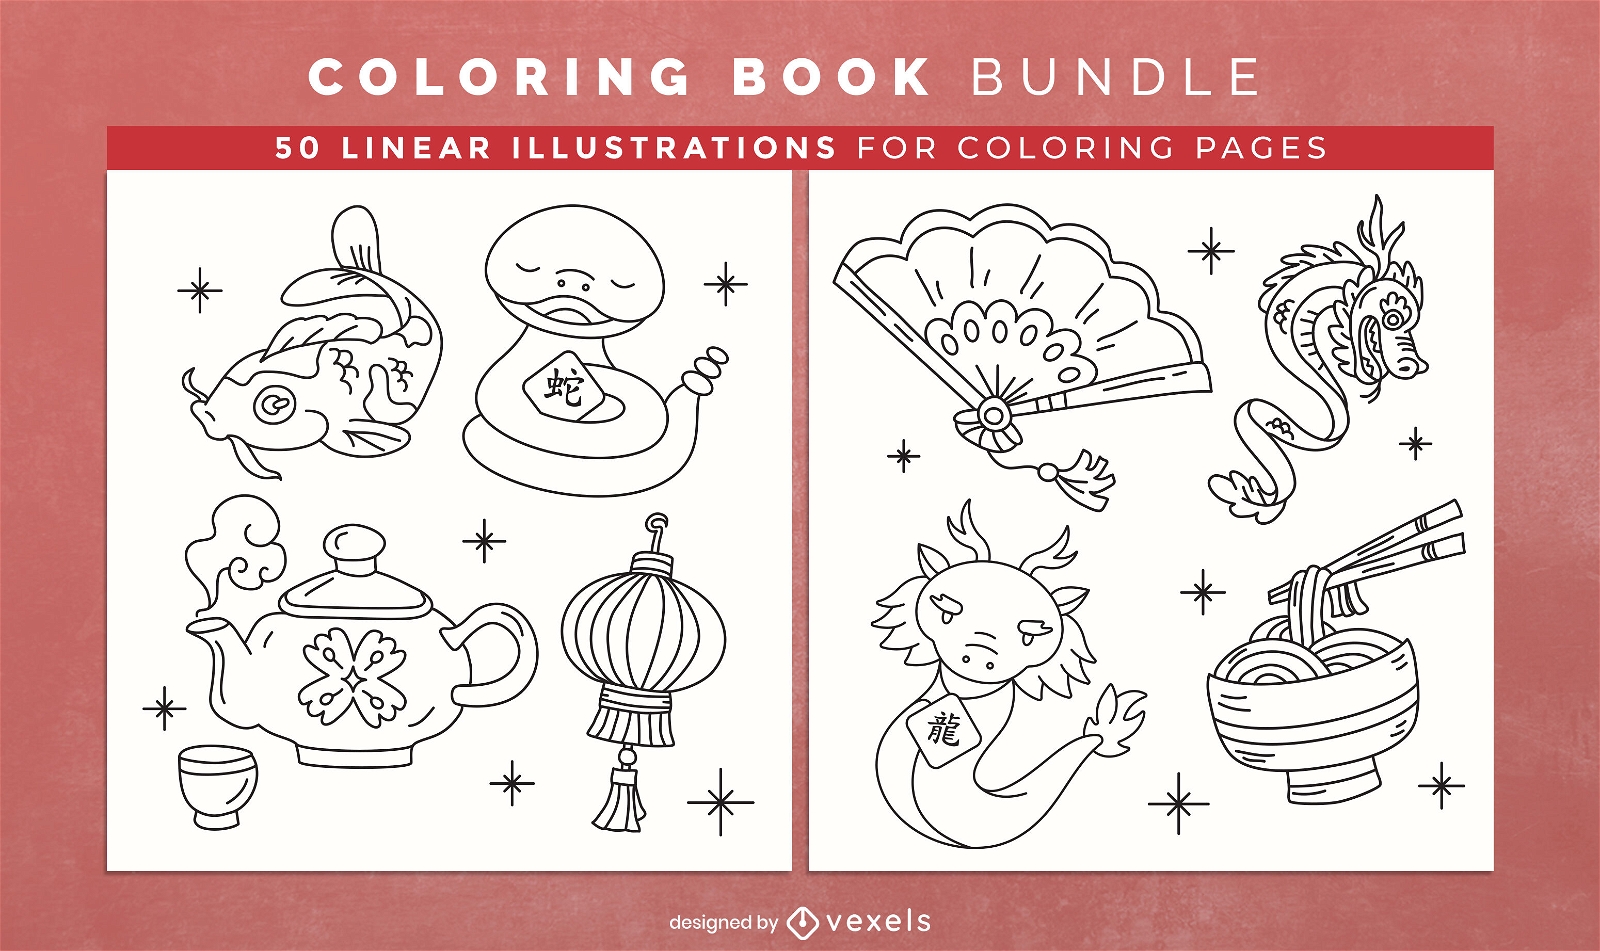 Asian culture coloring book interior design